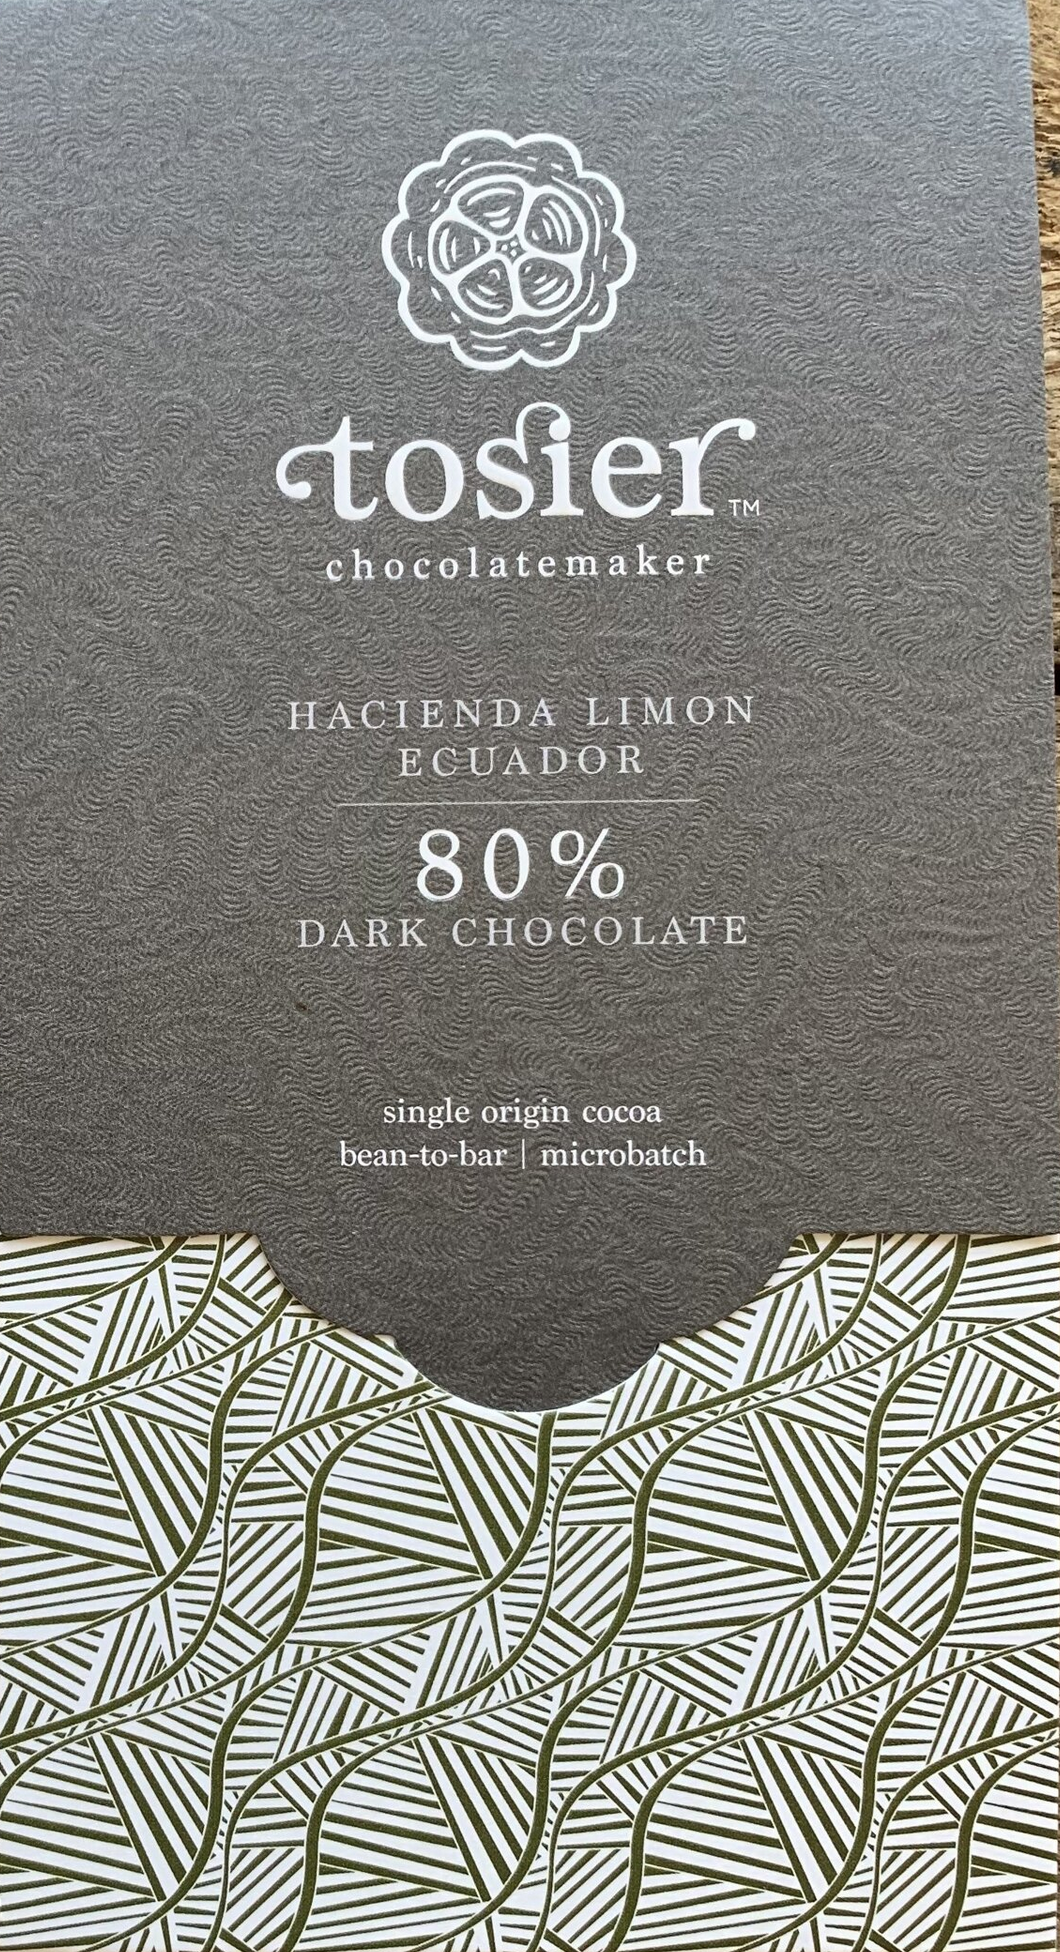 TOSIER | Dunkle Schokolade »Hacienda Limon Ecuador« 80%